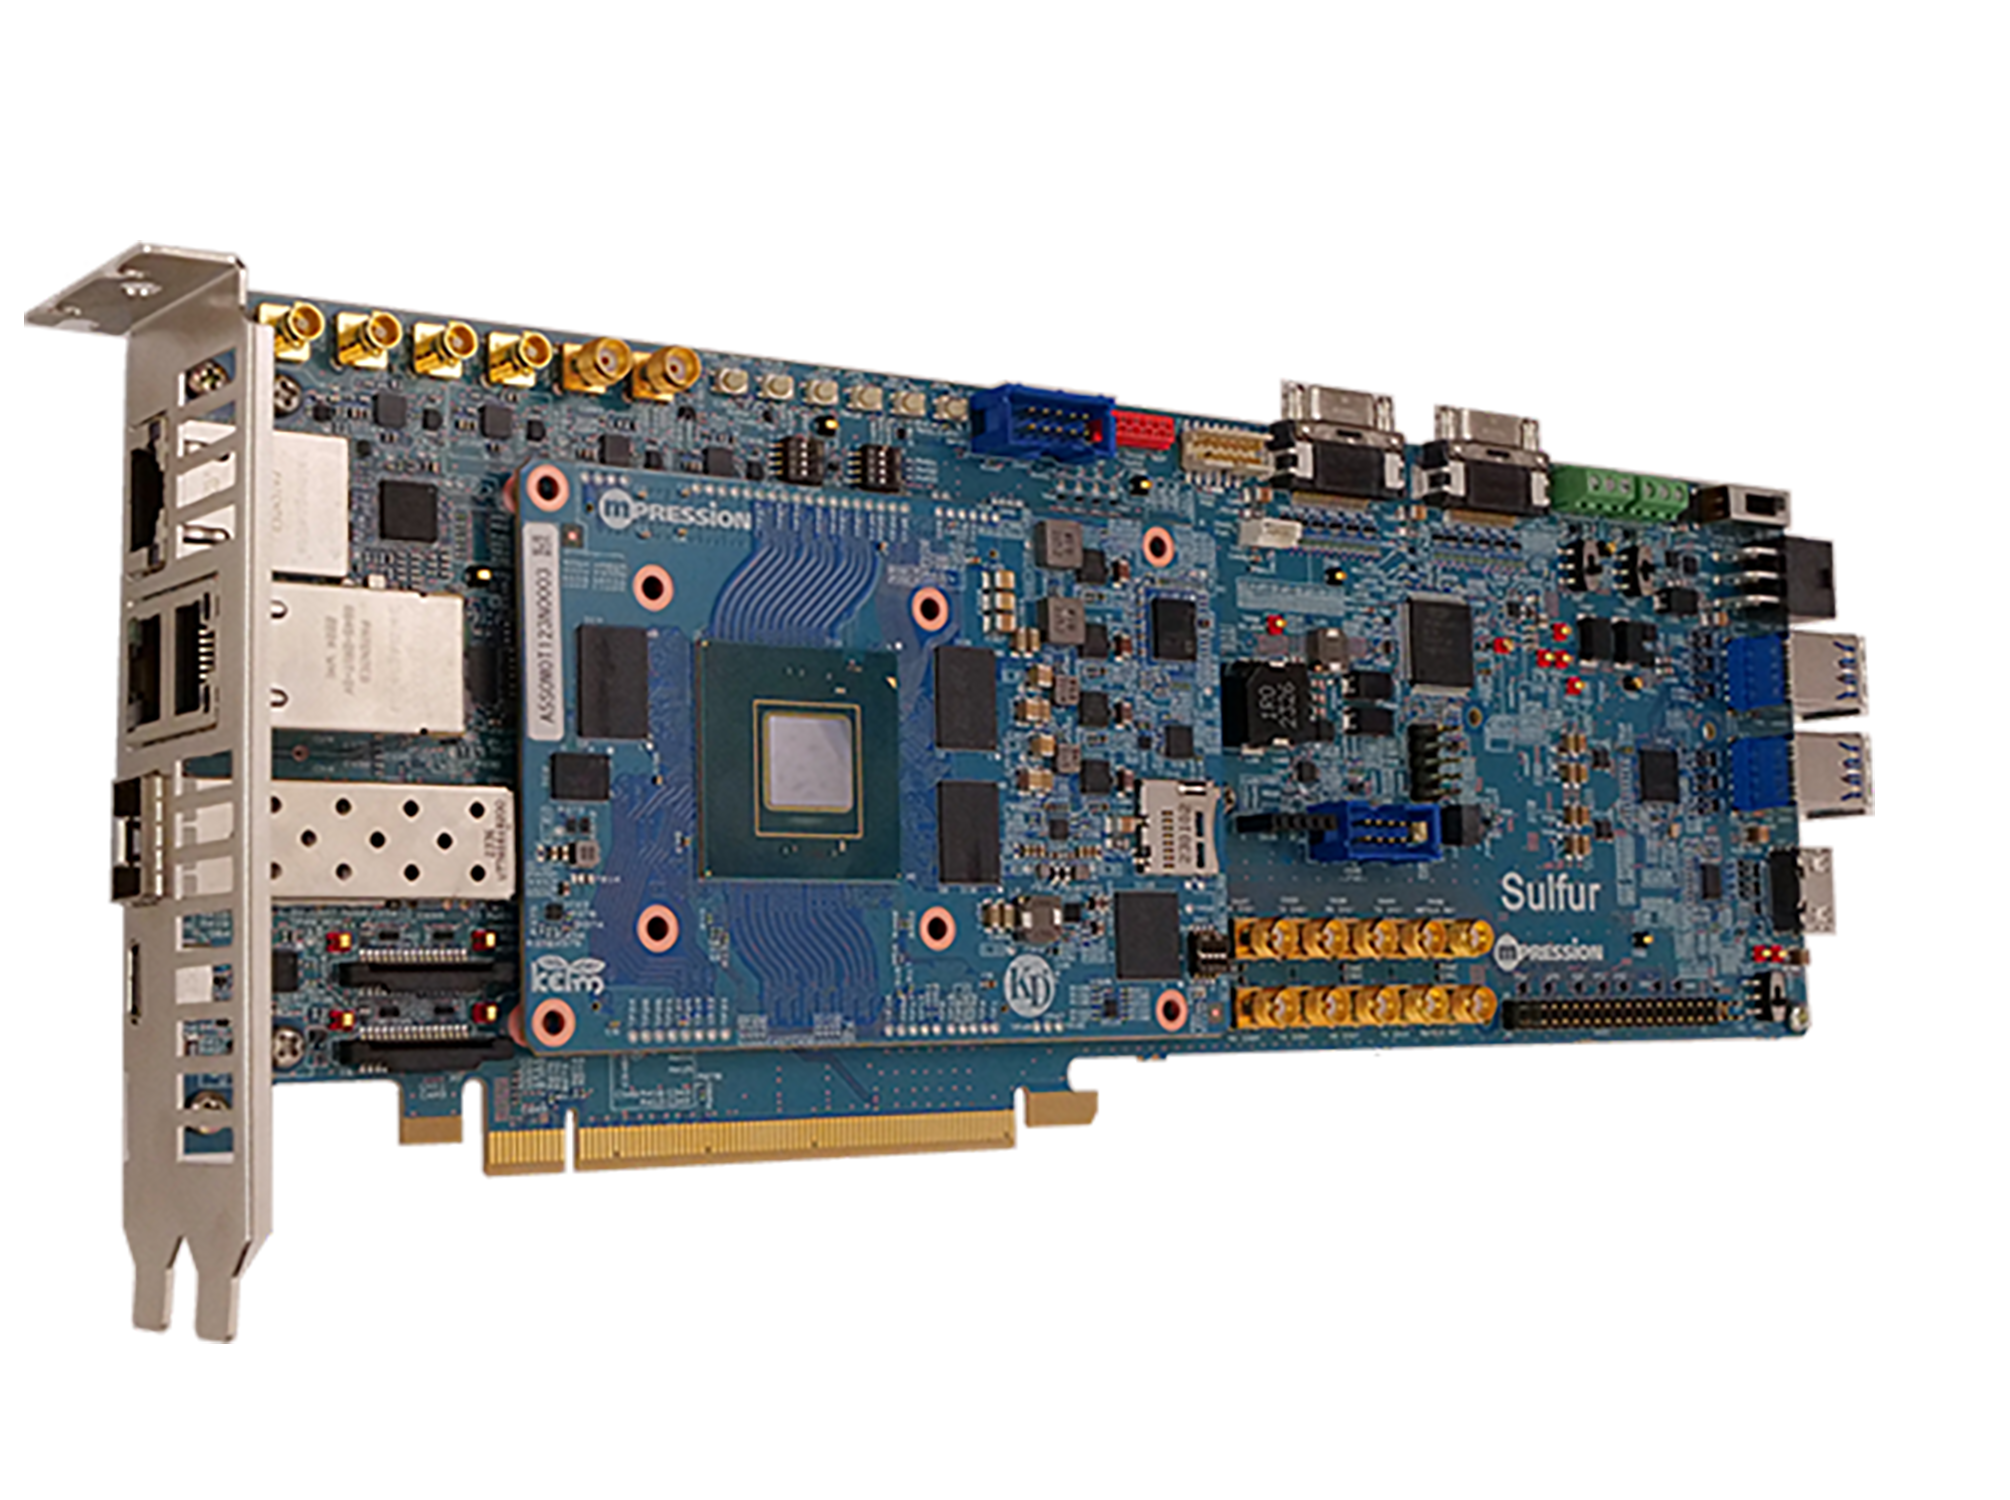 Sulfur - Agilex™ 5 FPGAs E シリーズ 搭載 SOM 開発キット